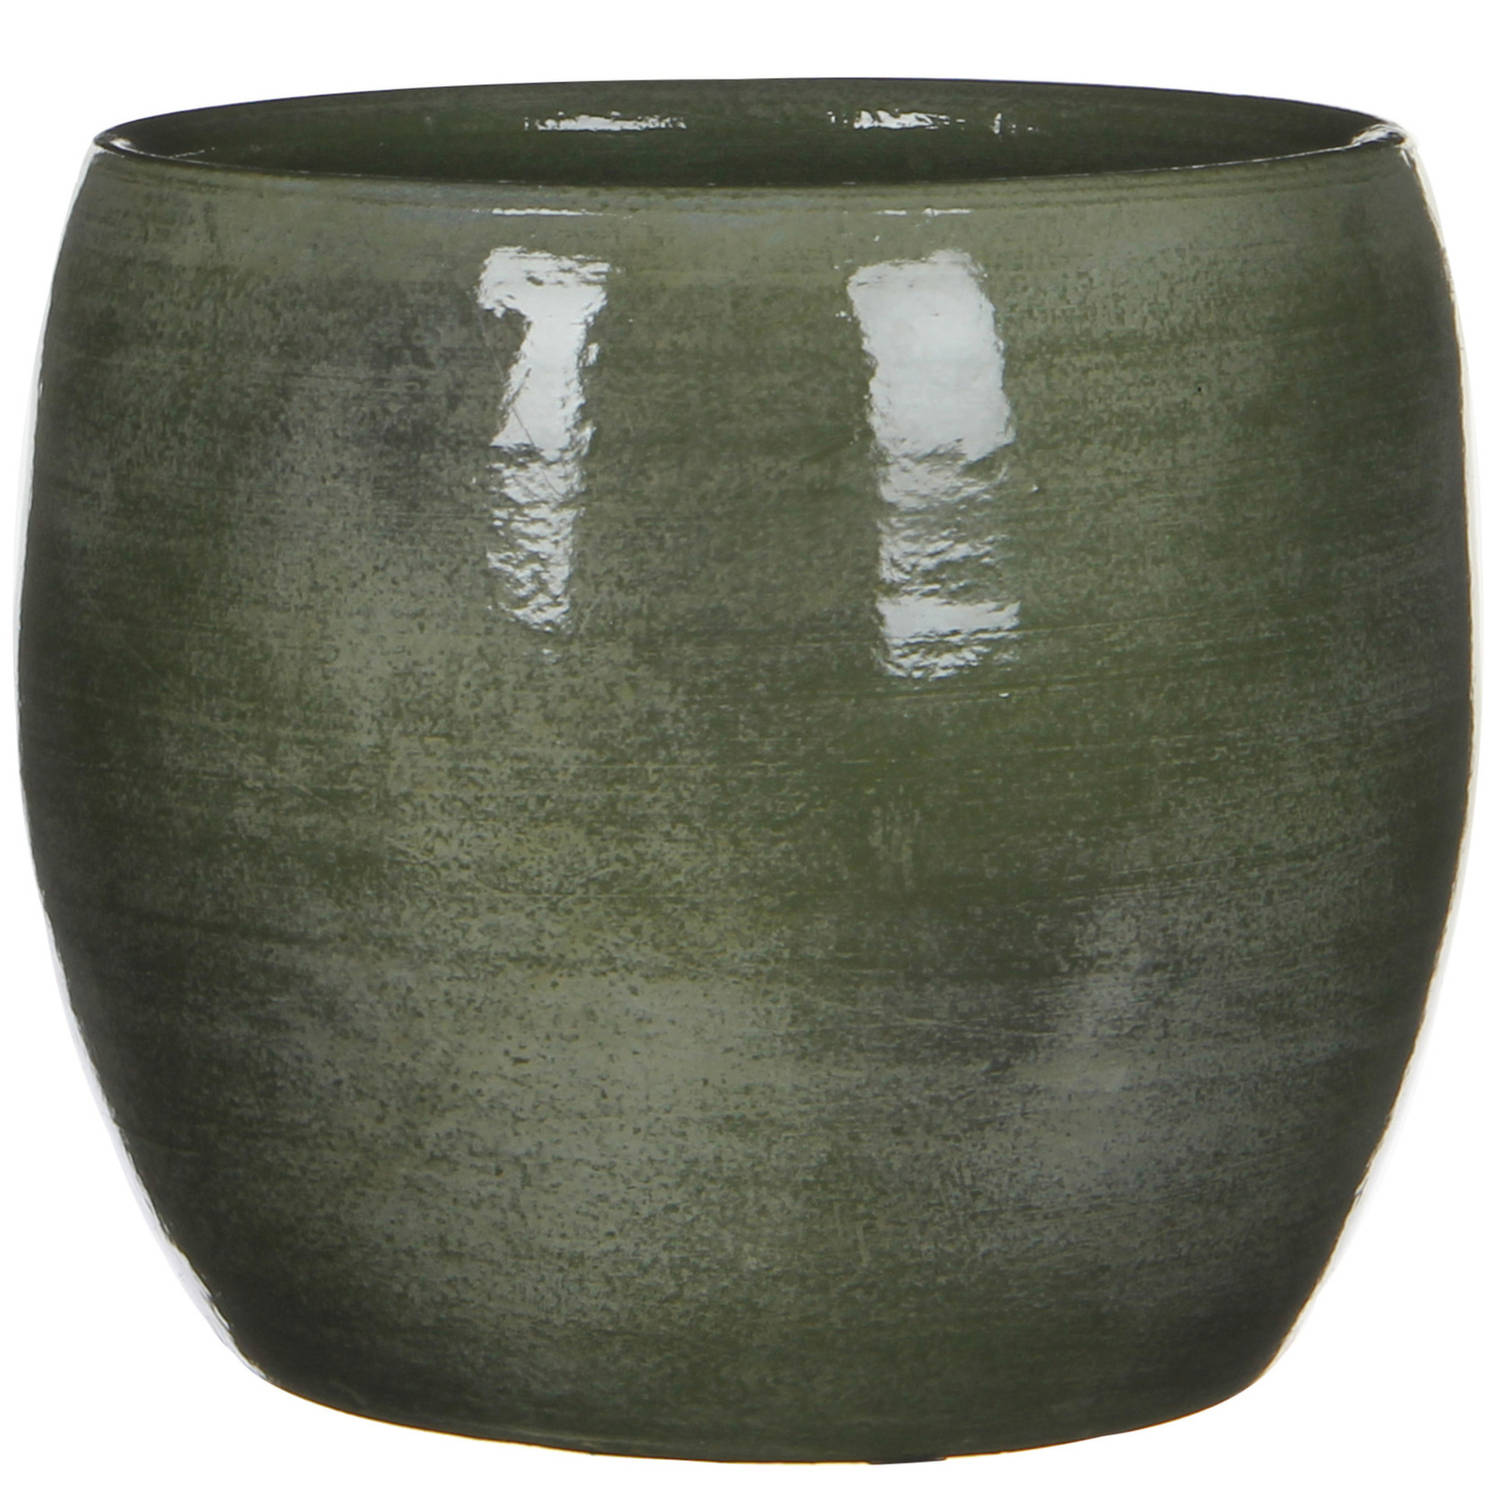 Mica Decorations lester ronde pot groen maat in cm: 18 x 20